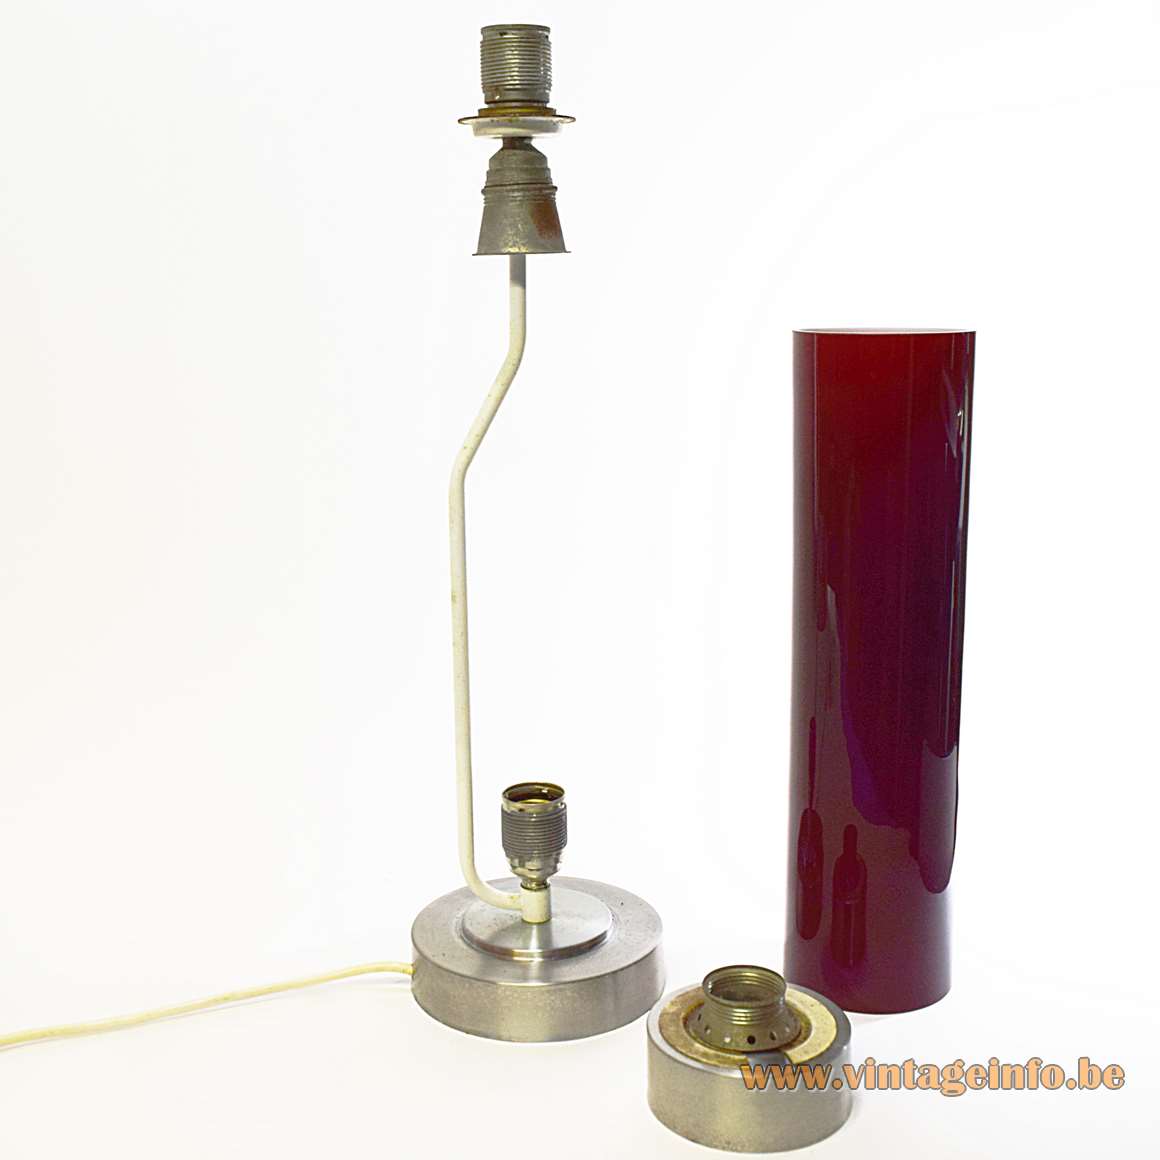 Incamiciato table lamp maroon red glas tube aluminium base 1960s 1970s yellow fabric lampshade MCM Murano